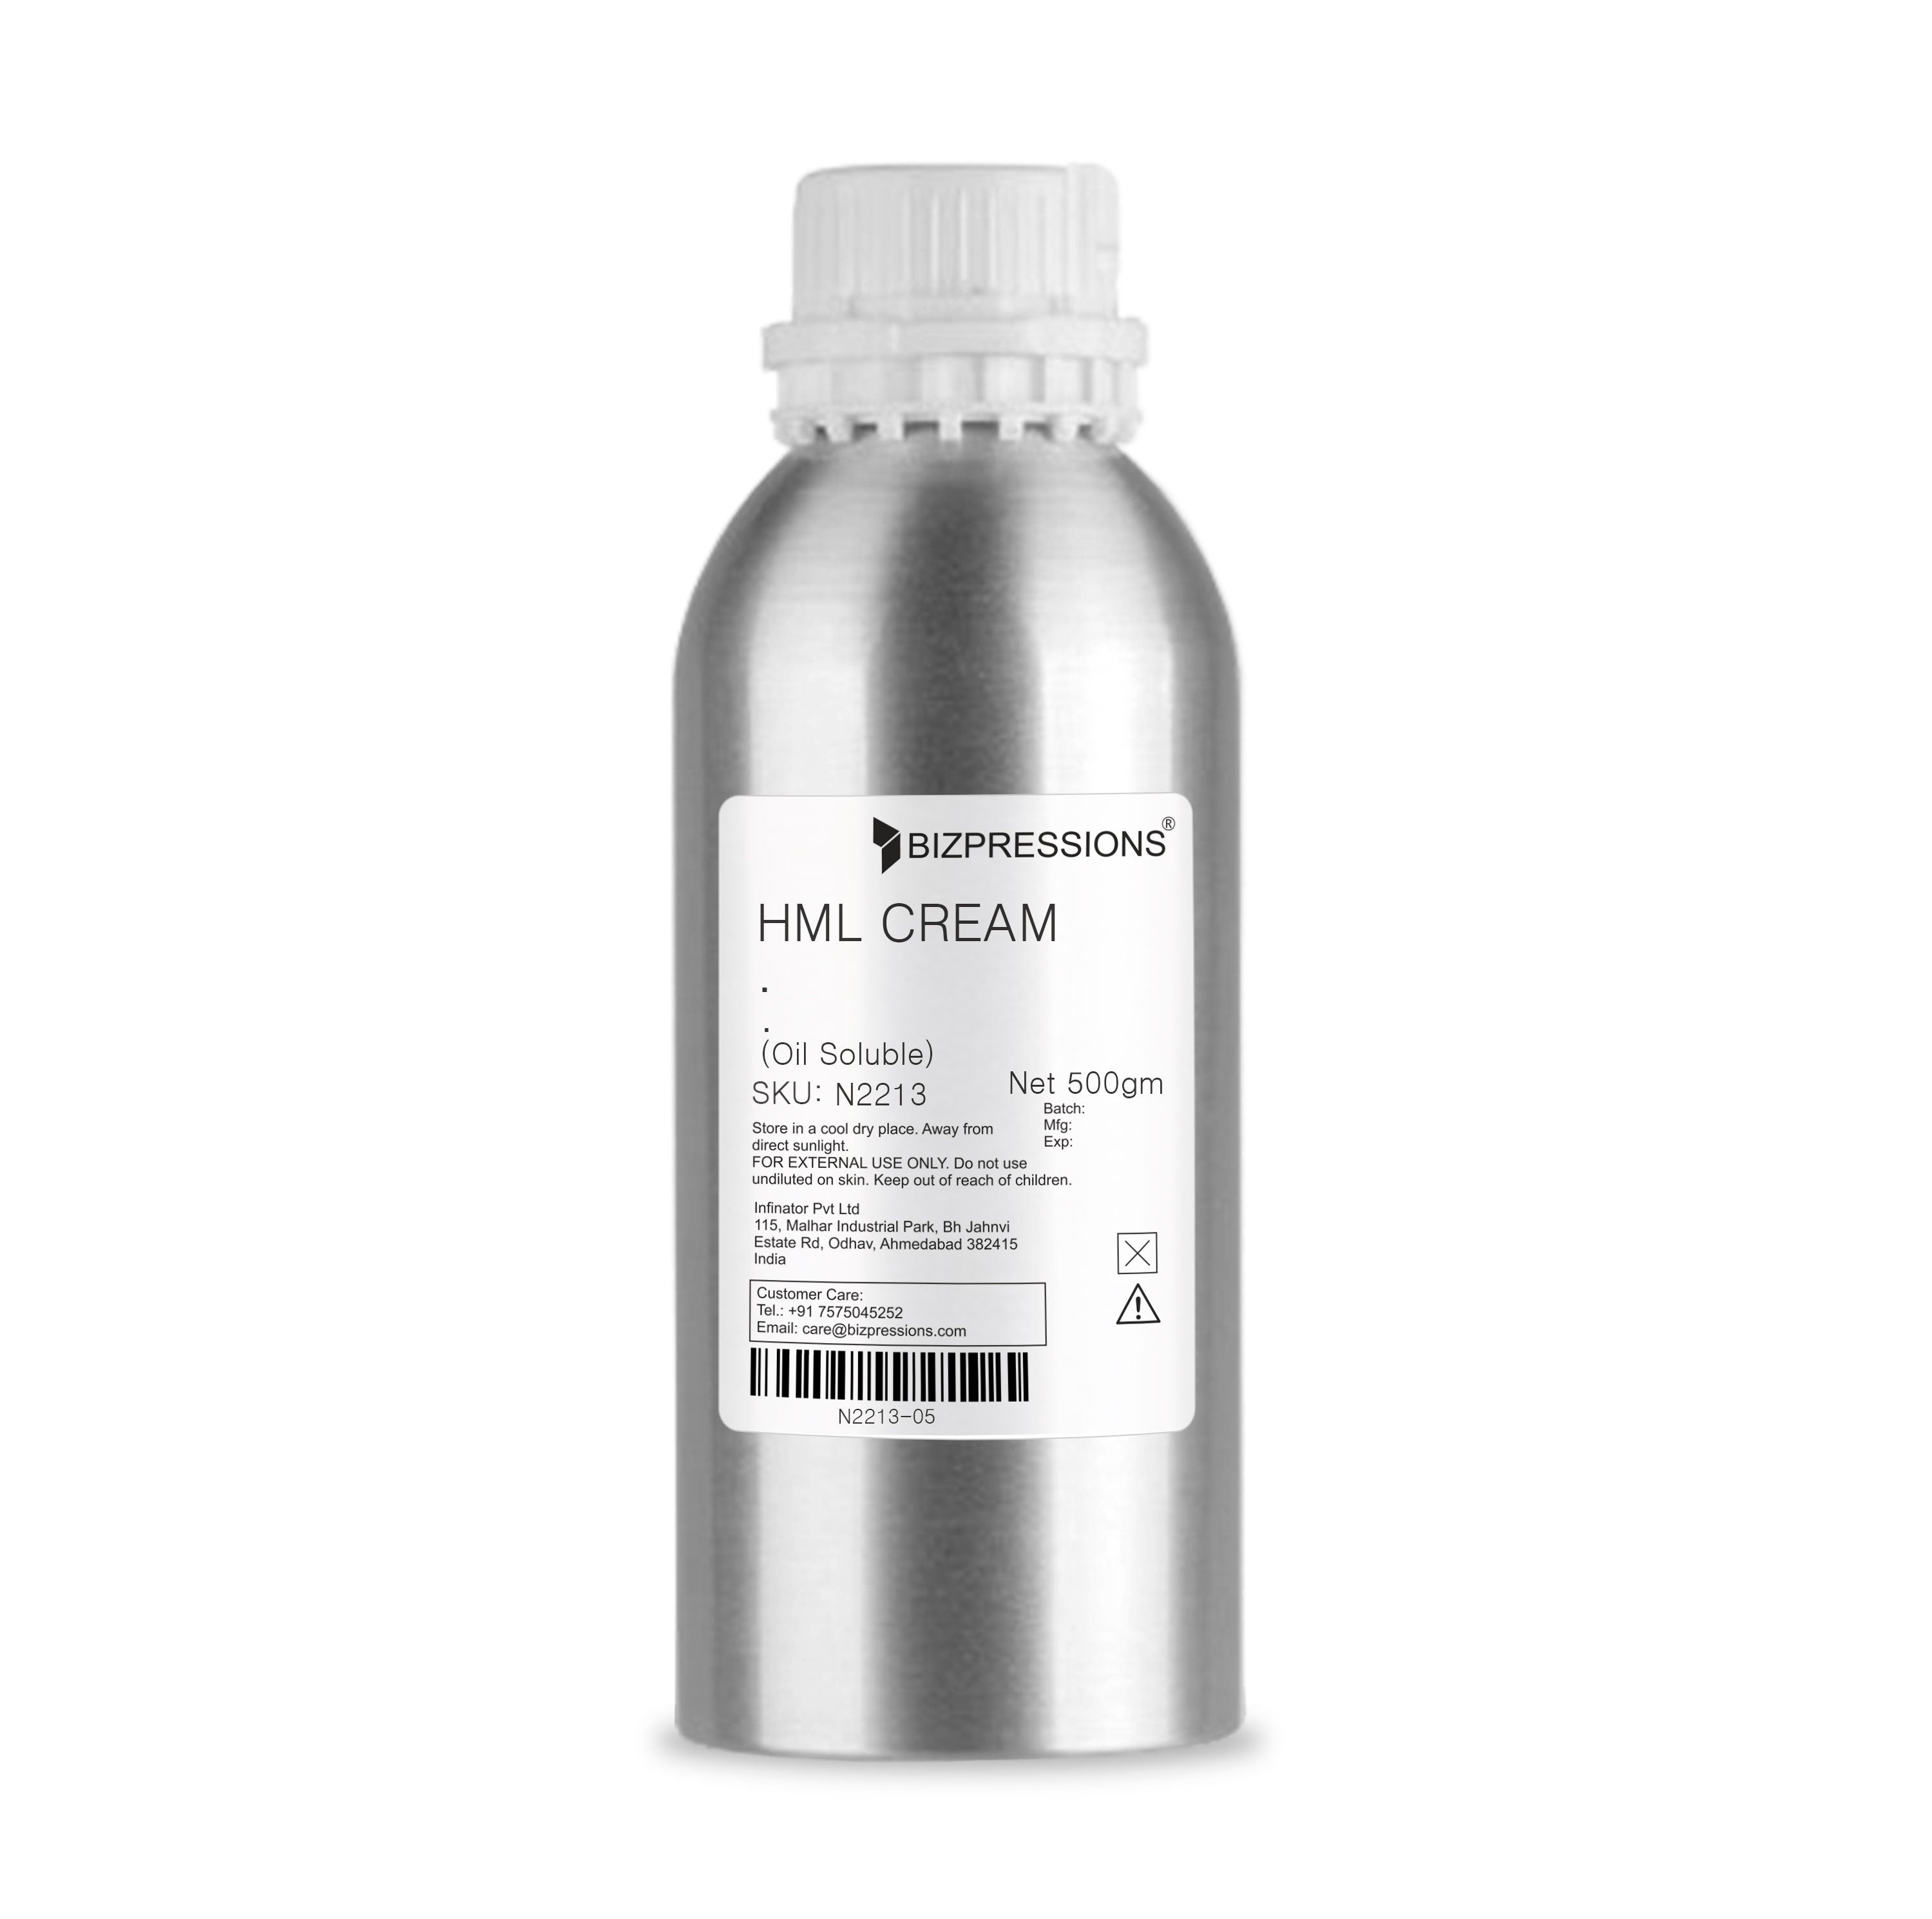 HML CREAM - Fragrance (Oil Soluble)